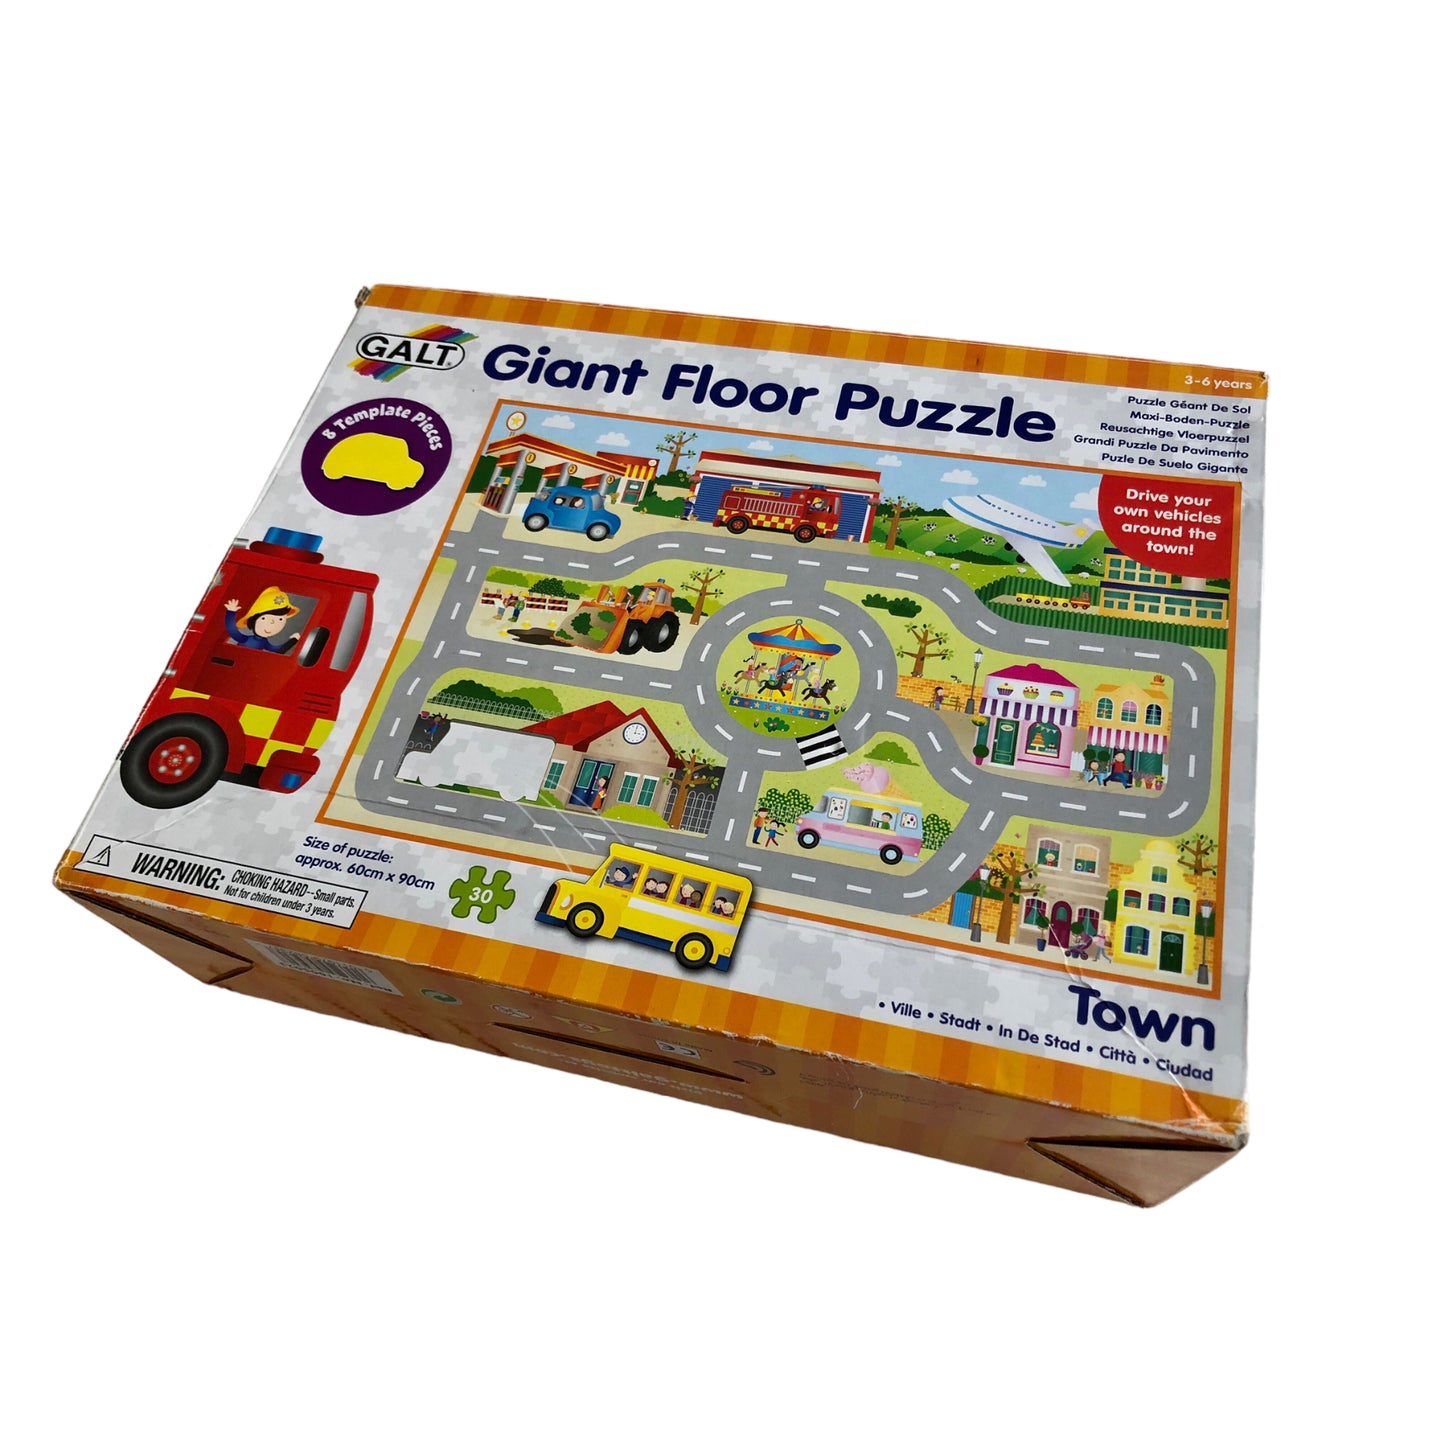 Giant Floor Puzzle - Town - 30 pieces